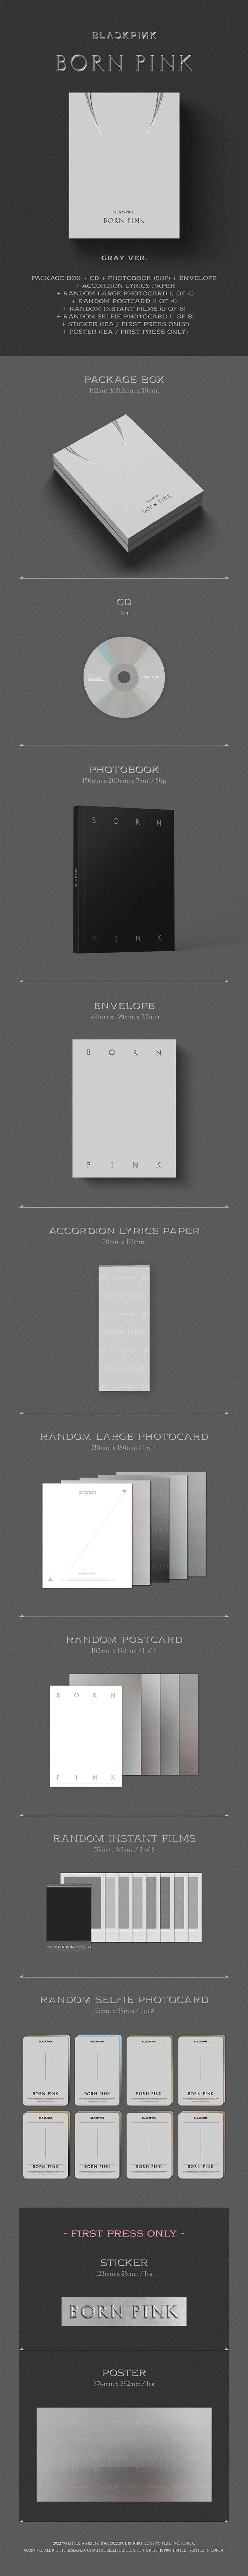 BLACKPINK 2ND ALBUM [BORN PINK] BOX SET VER GRAY Infographic